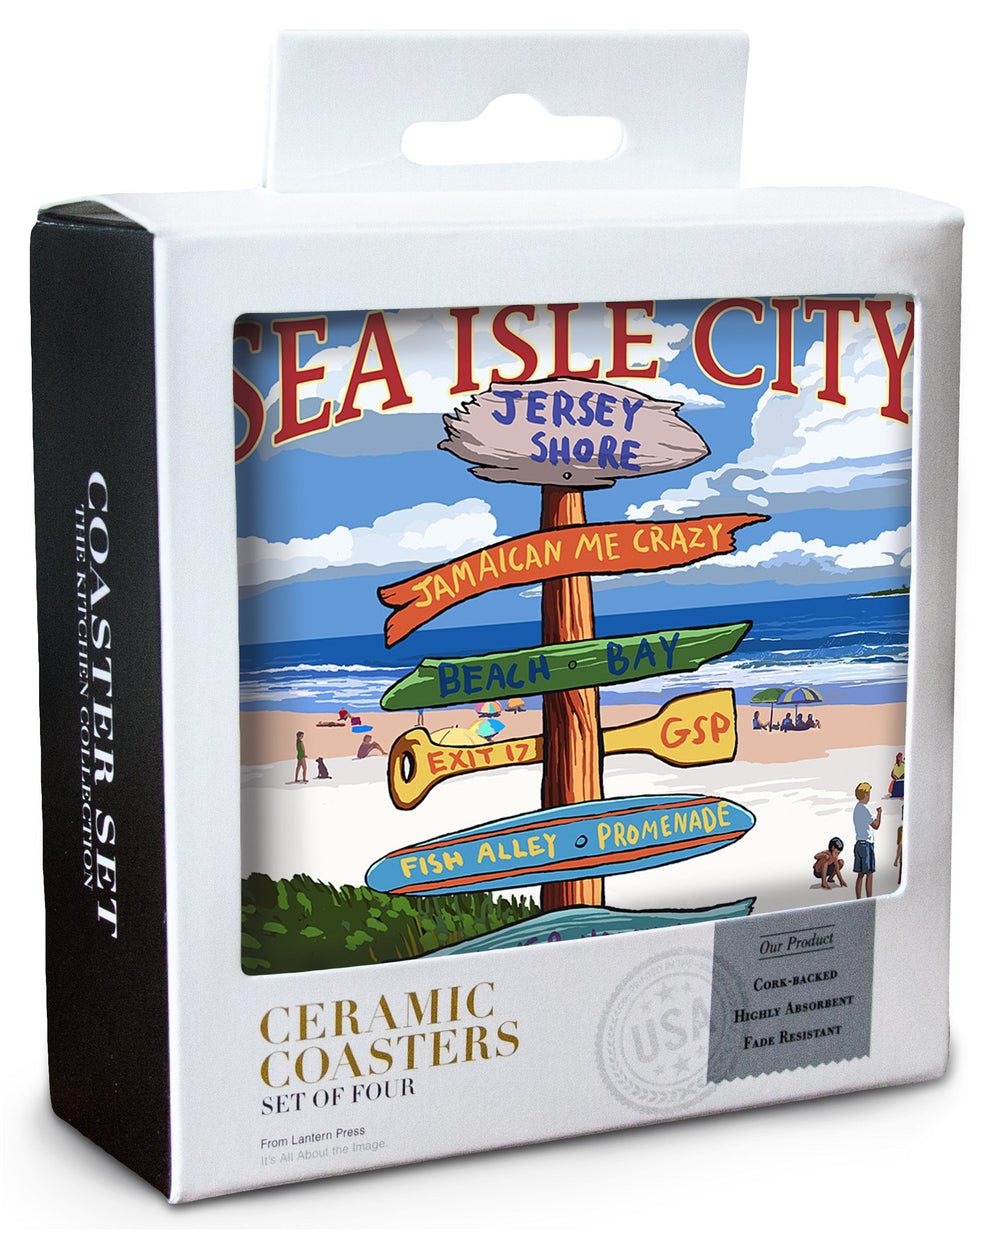 Sea Isle City, New Jersey, Destinations Sign, Lantern Press Artwork, Coaster Set Coasters Lantern Press 